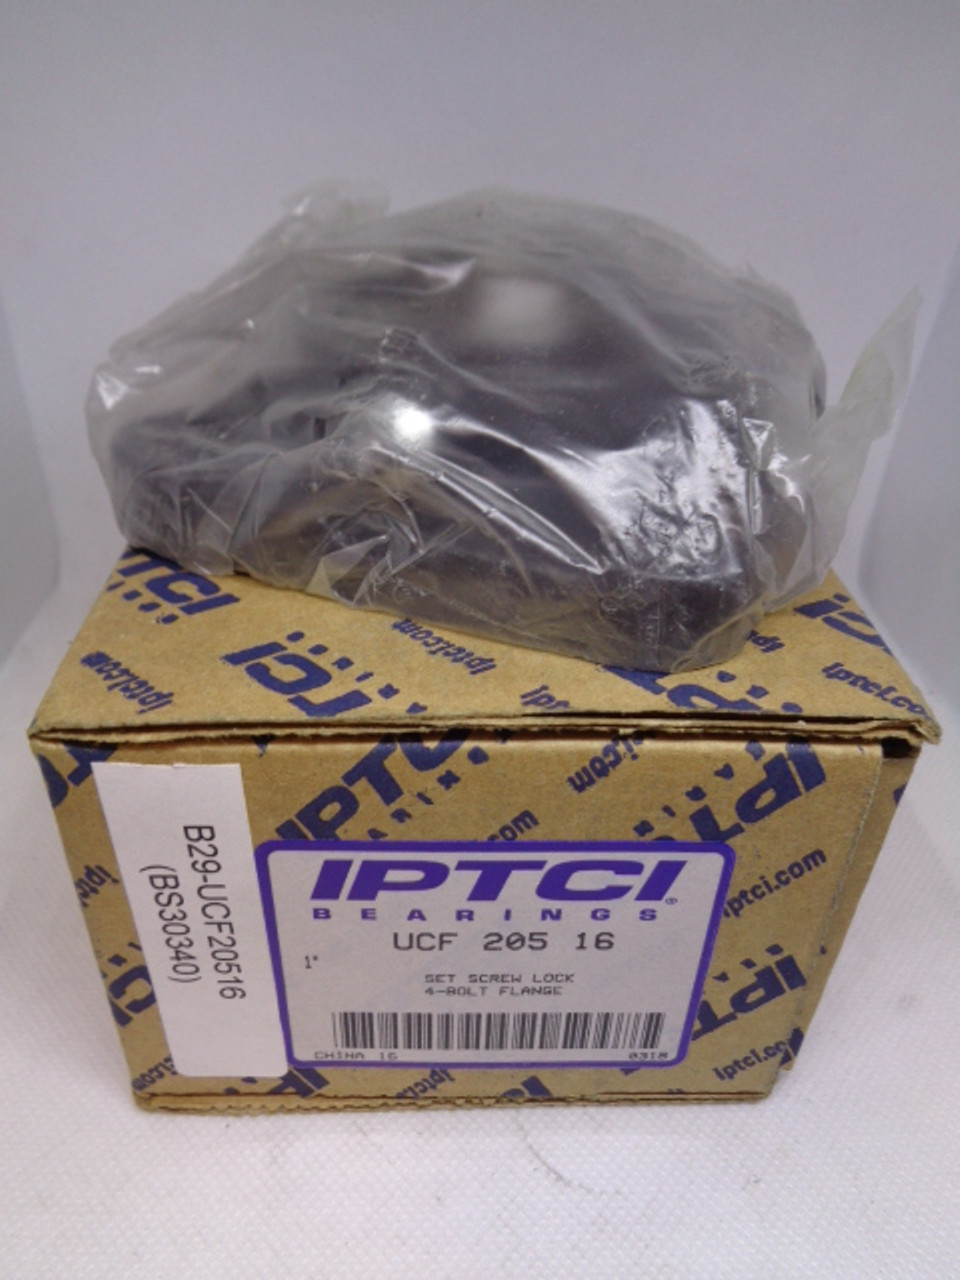 IPTCI Bearings UCF 205 16 Set Screw Lock 4-Bolt Flange - NEW